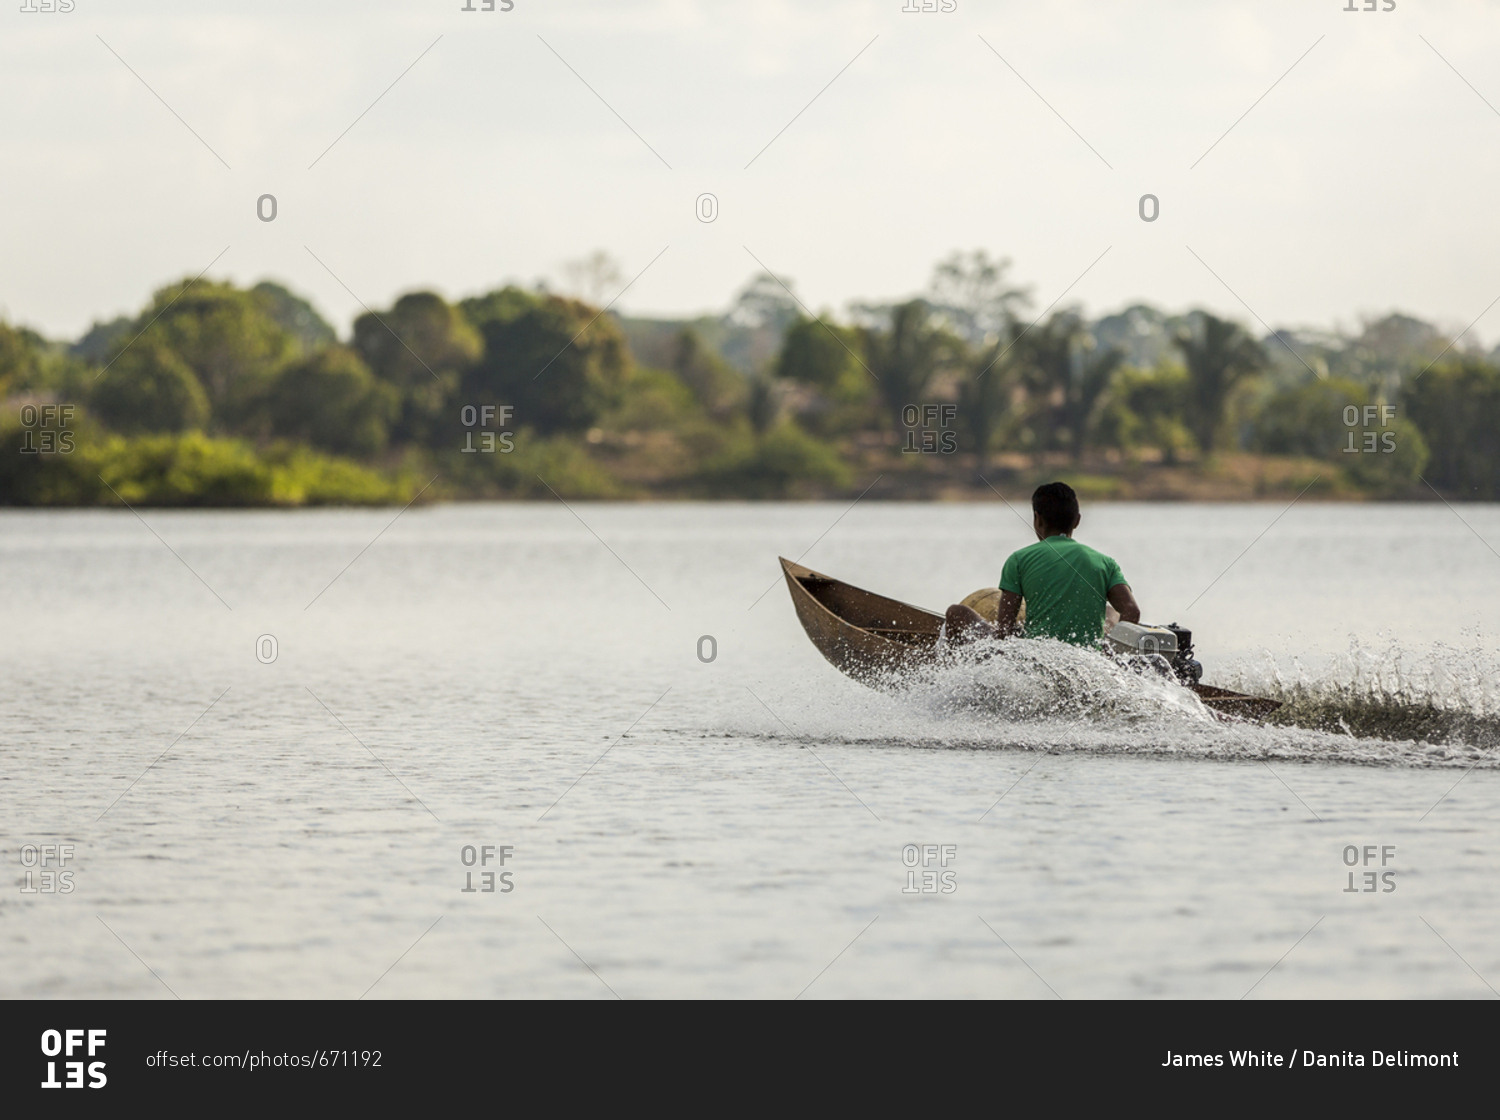 Man in a wooden motorized canoe speeds across the Amazon River near Manaus, Brazil